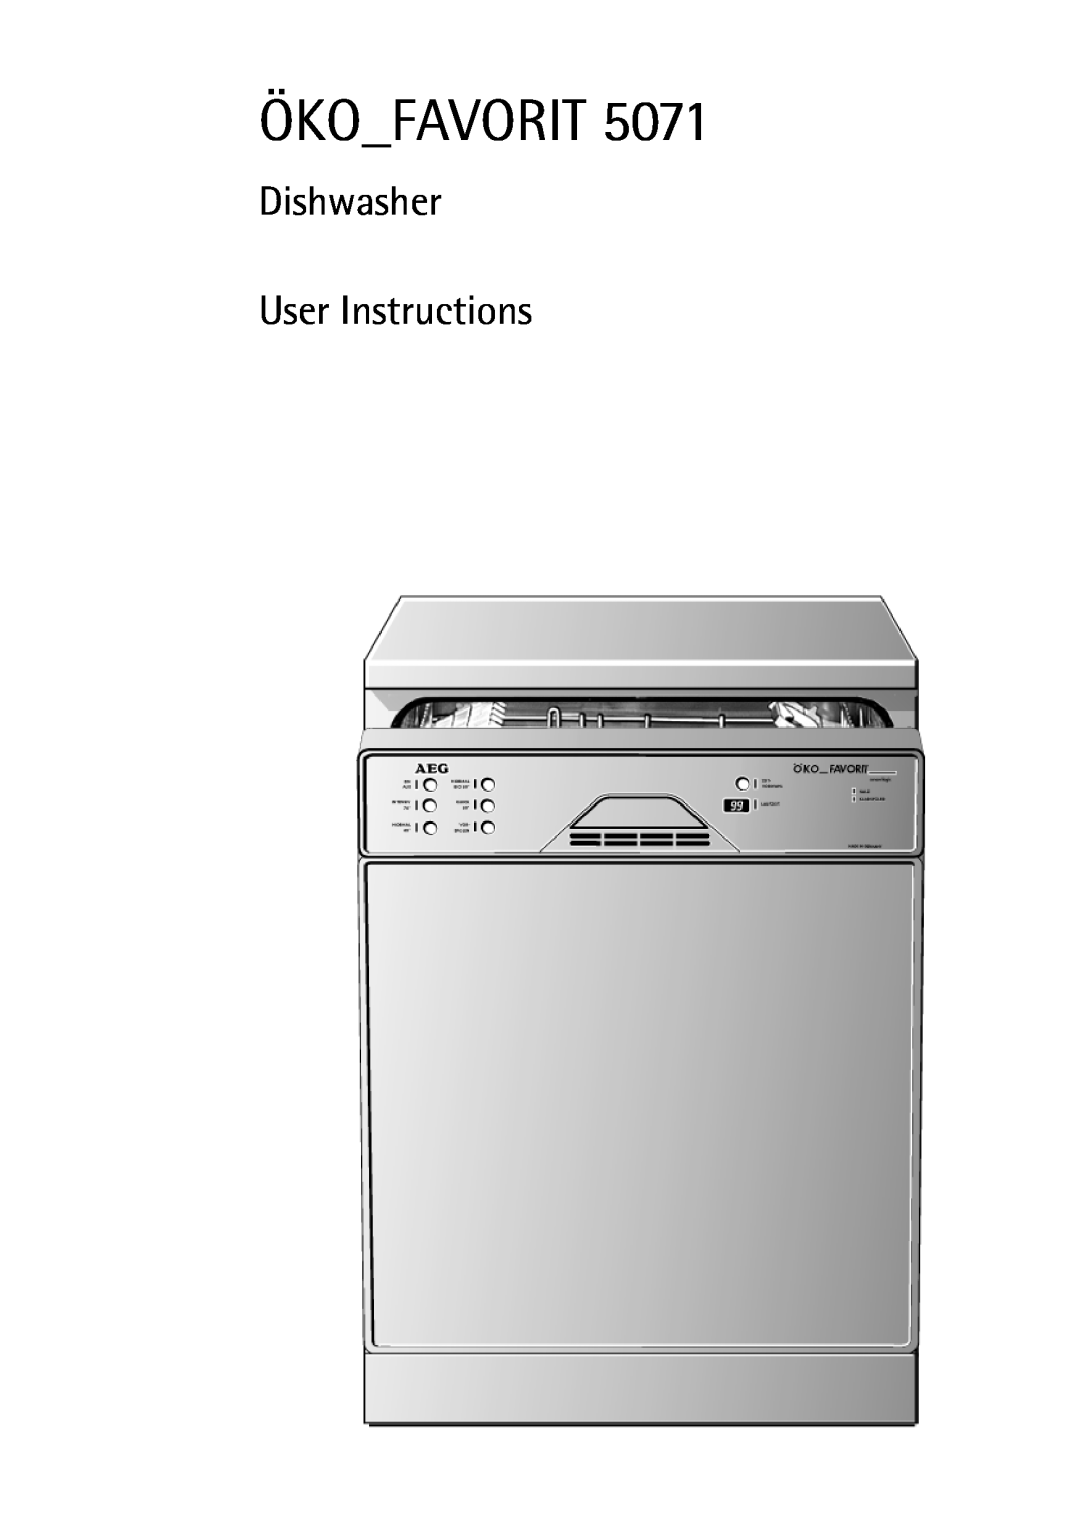 AEG 5071 manual Ökofavorit, Dishwasher User Instructions 